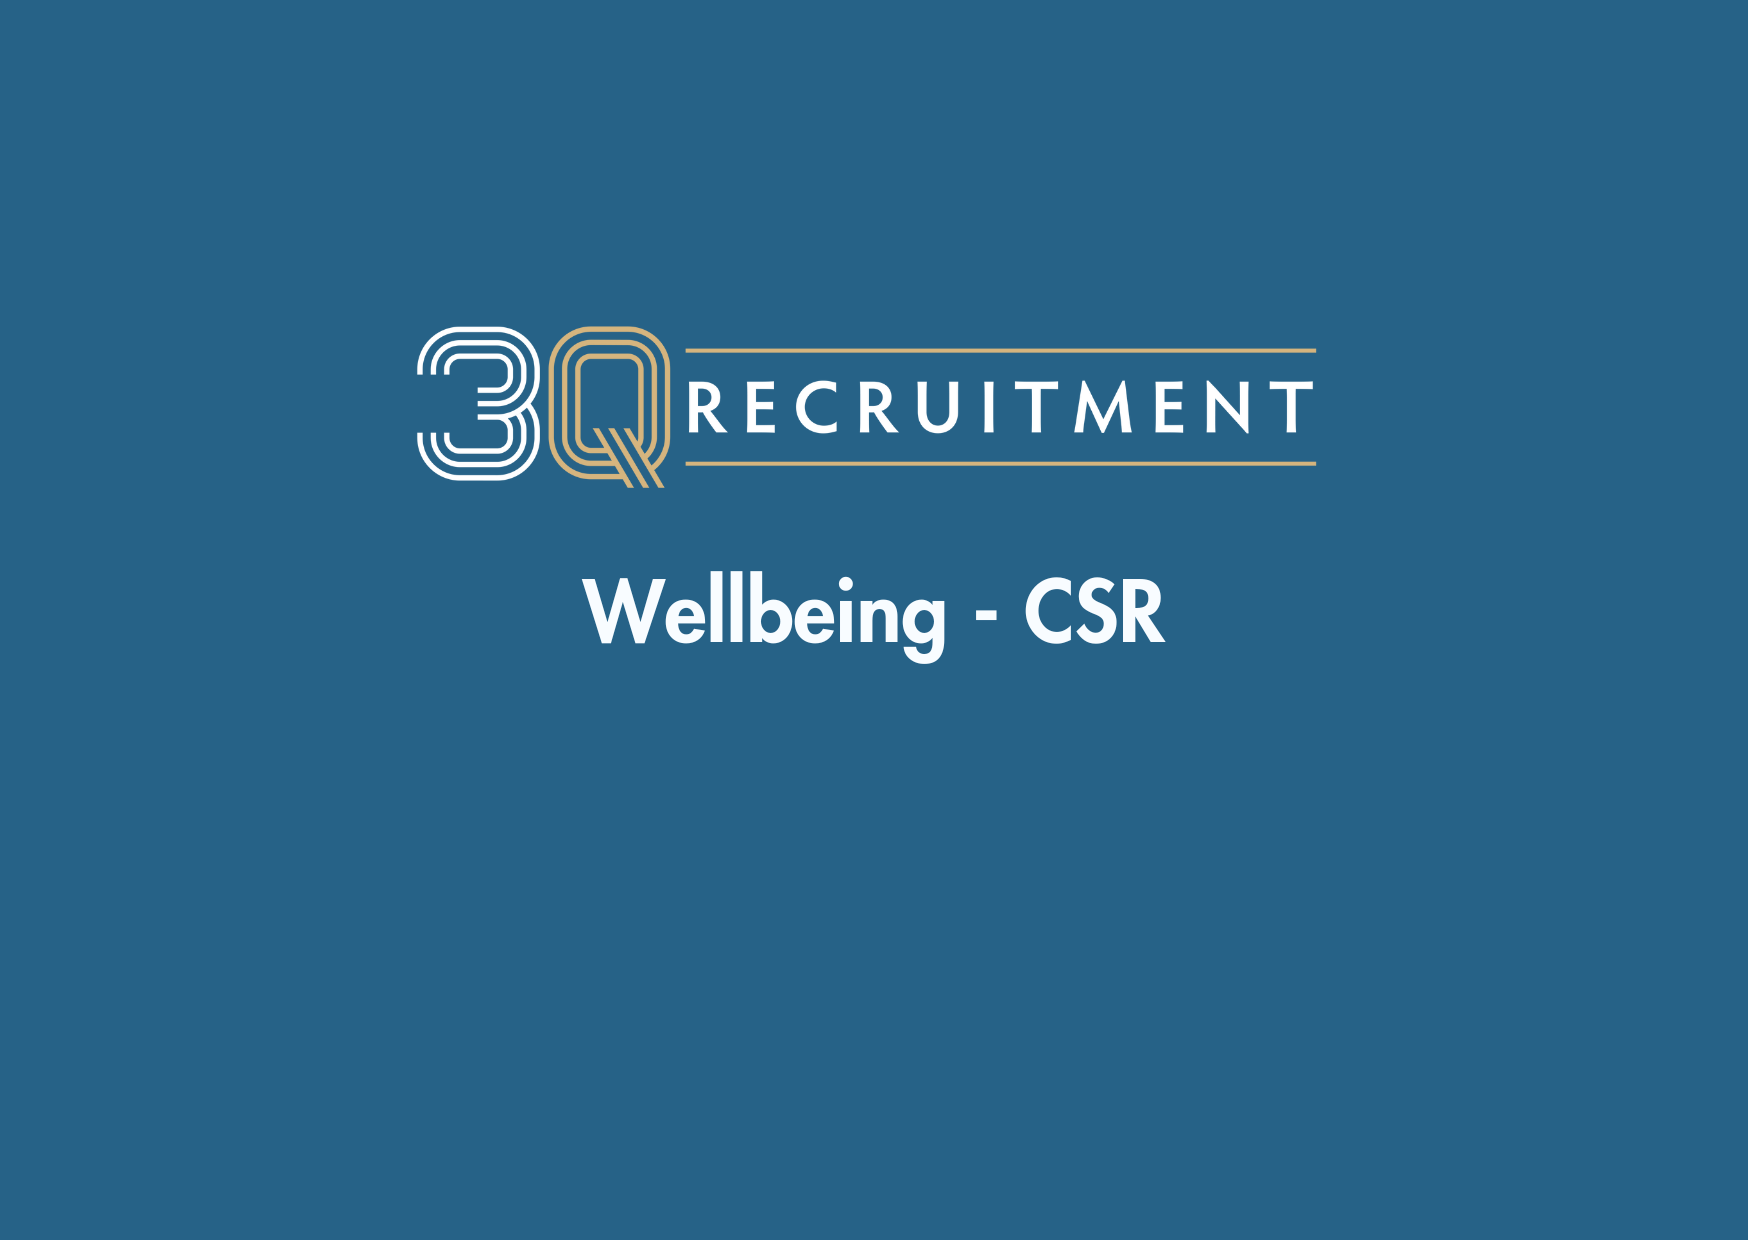 3Q Recruitment Wellbeing - CSR